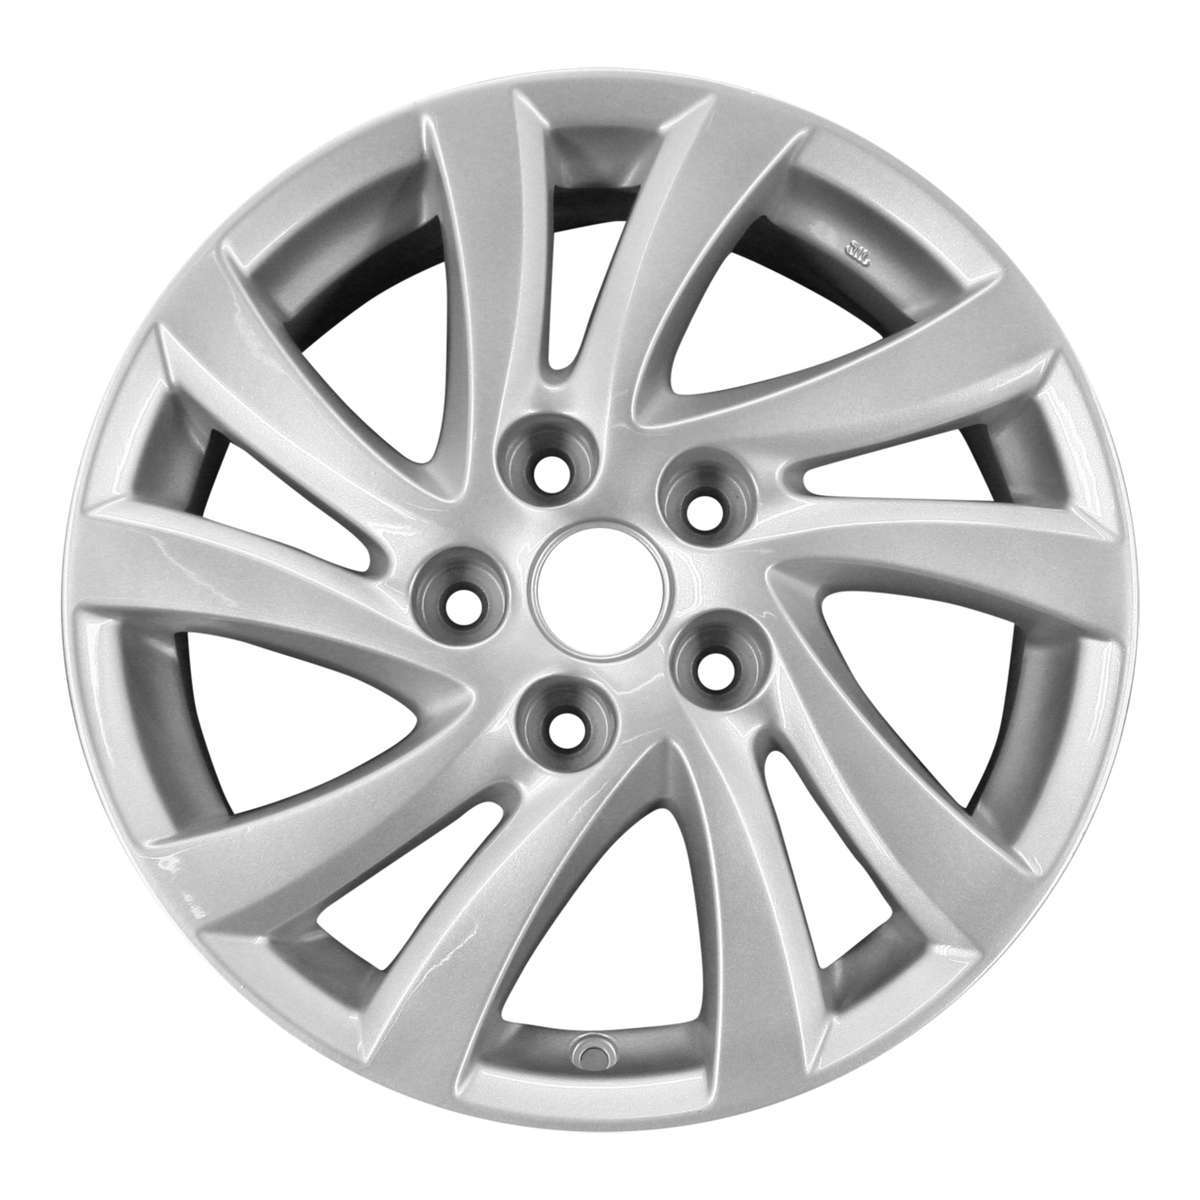 2012 Mazda 3 New 16" Replacement Wheel Rim RW64946S